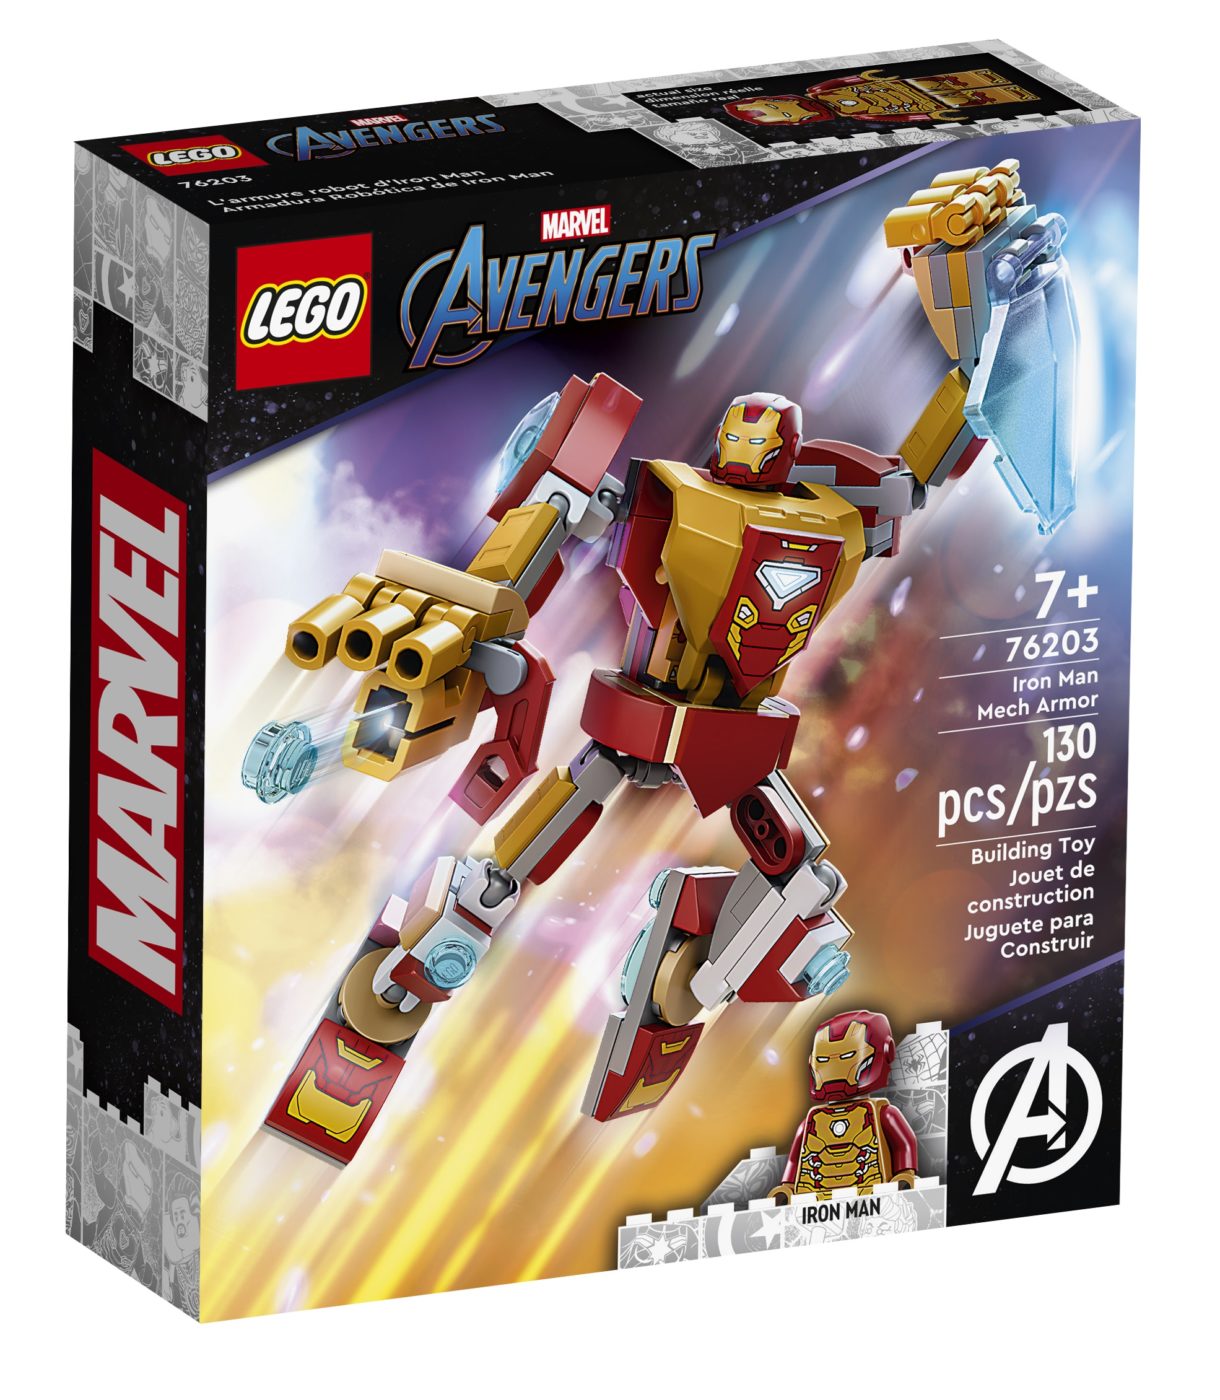 76203 Iron Man Mech Armor Box